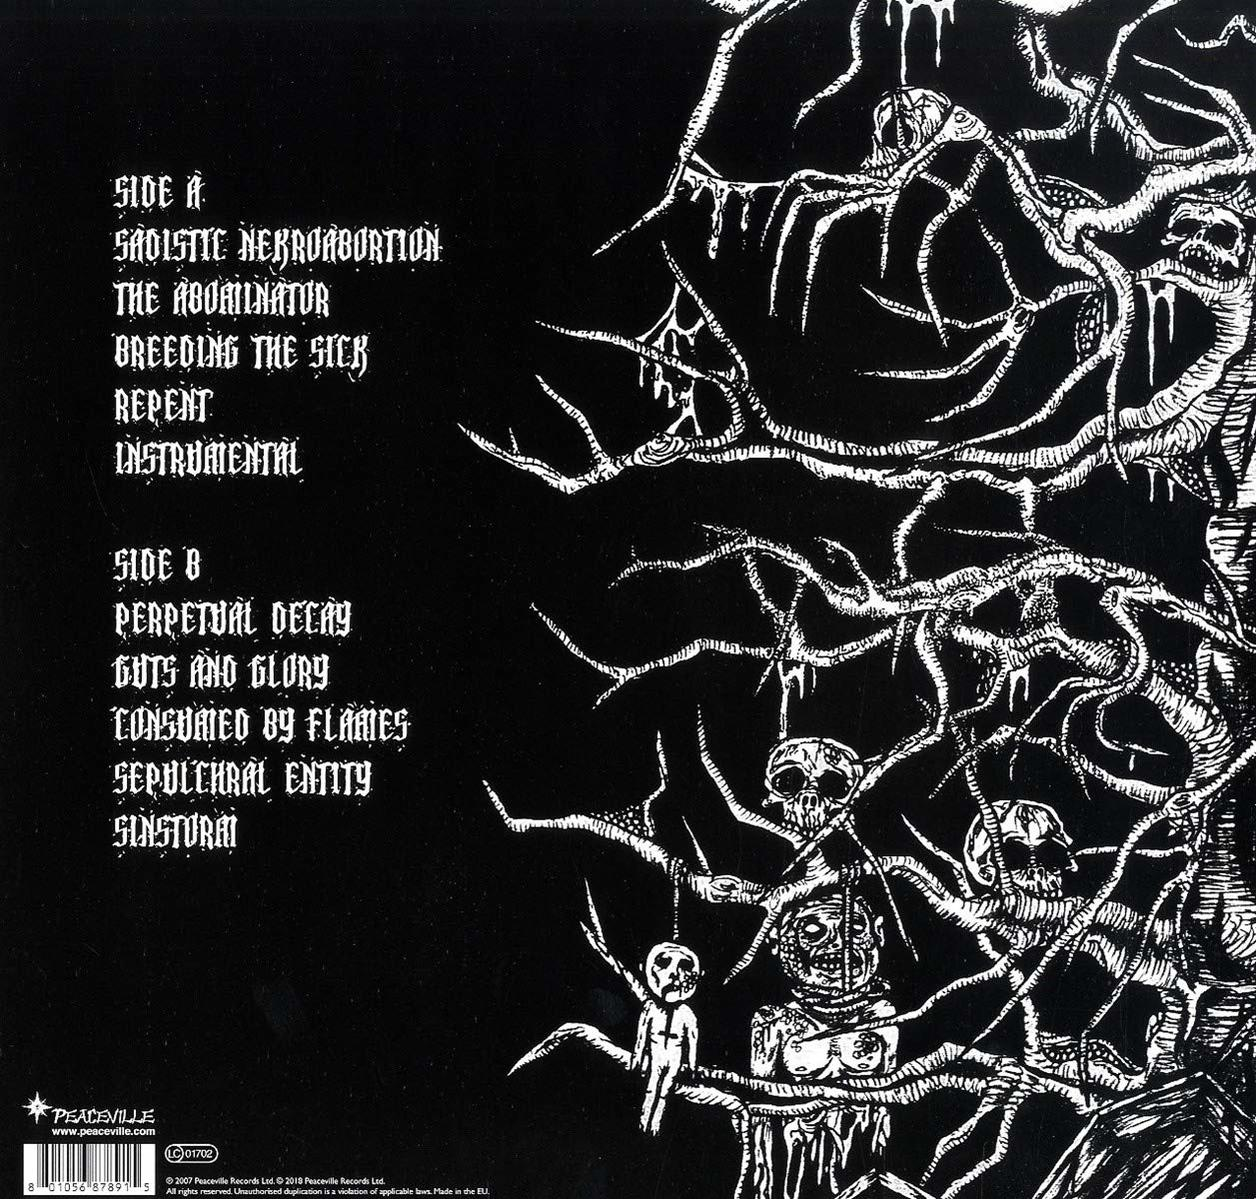 Obliteration - Perpetual Decay (Vinyl) 